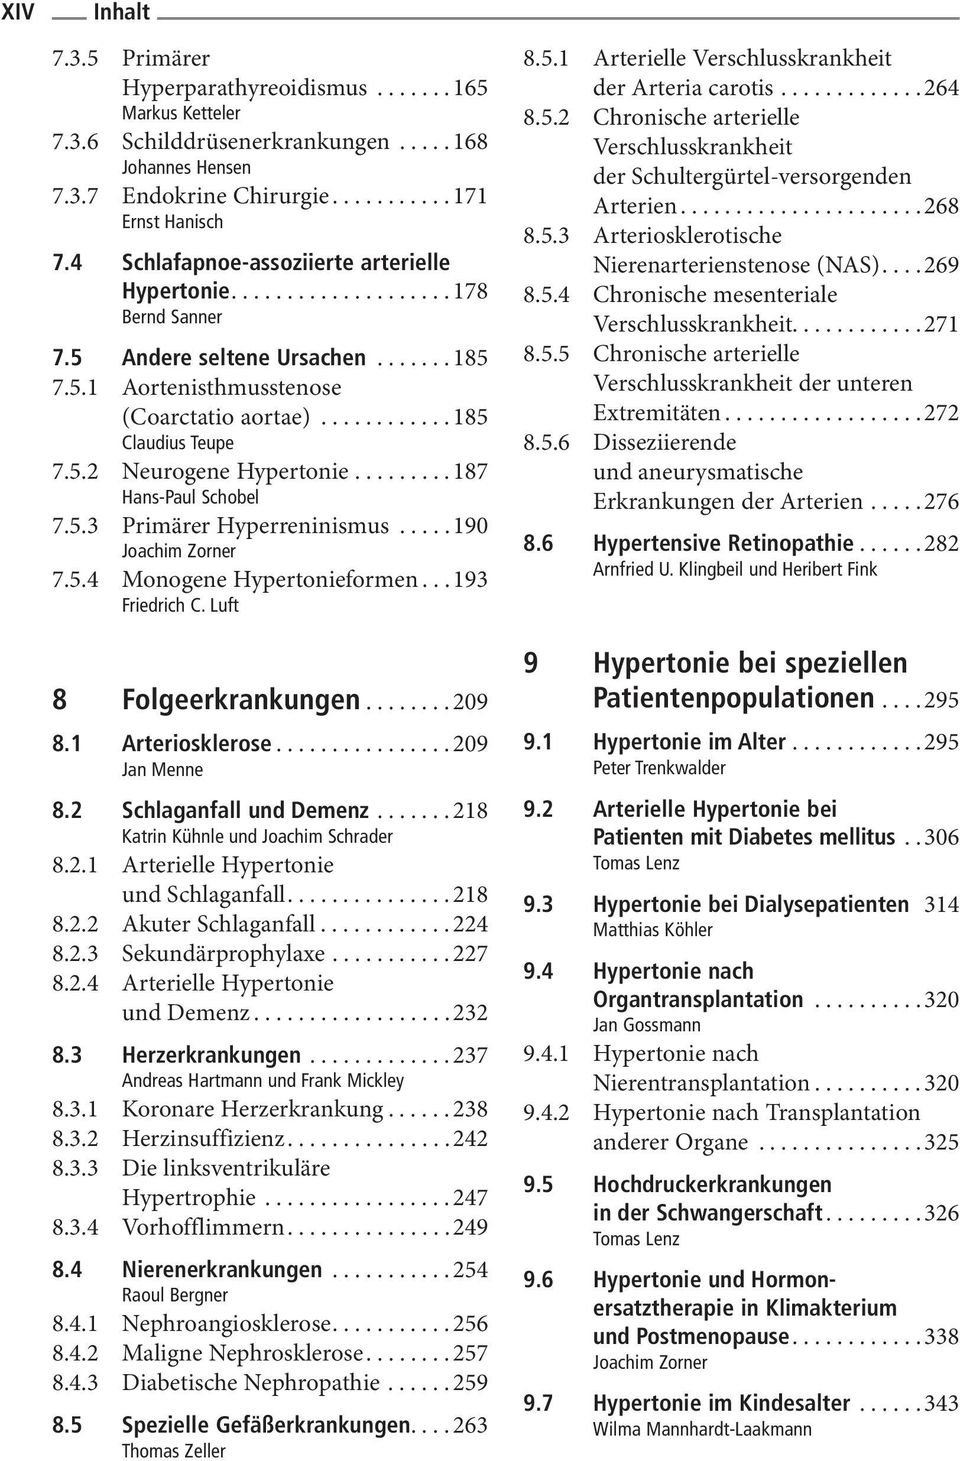 5.2 Neurogene Hypertonie......... 187 Hans-Paul Schobel 7.5.3 Primärer Hyperreninismus..... 190 7.5.4 Monogene Hypertonieformen... 193 Friedrich C. Luft 8 Folgeerkrankungen........ 209 8.